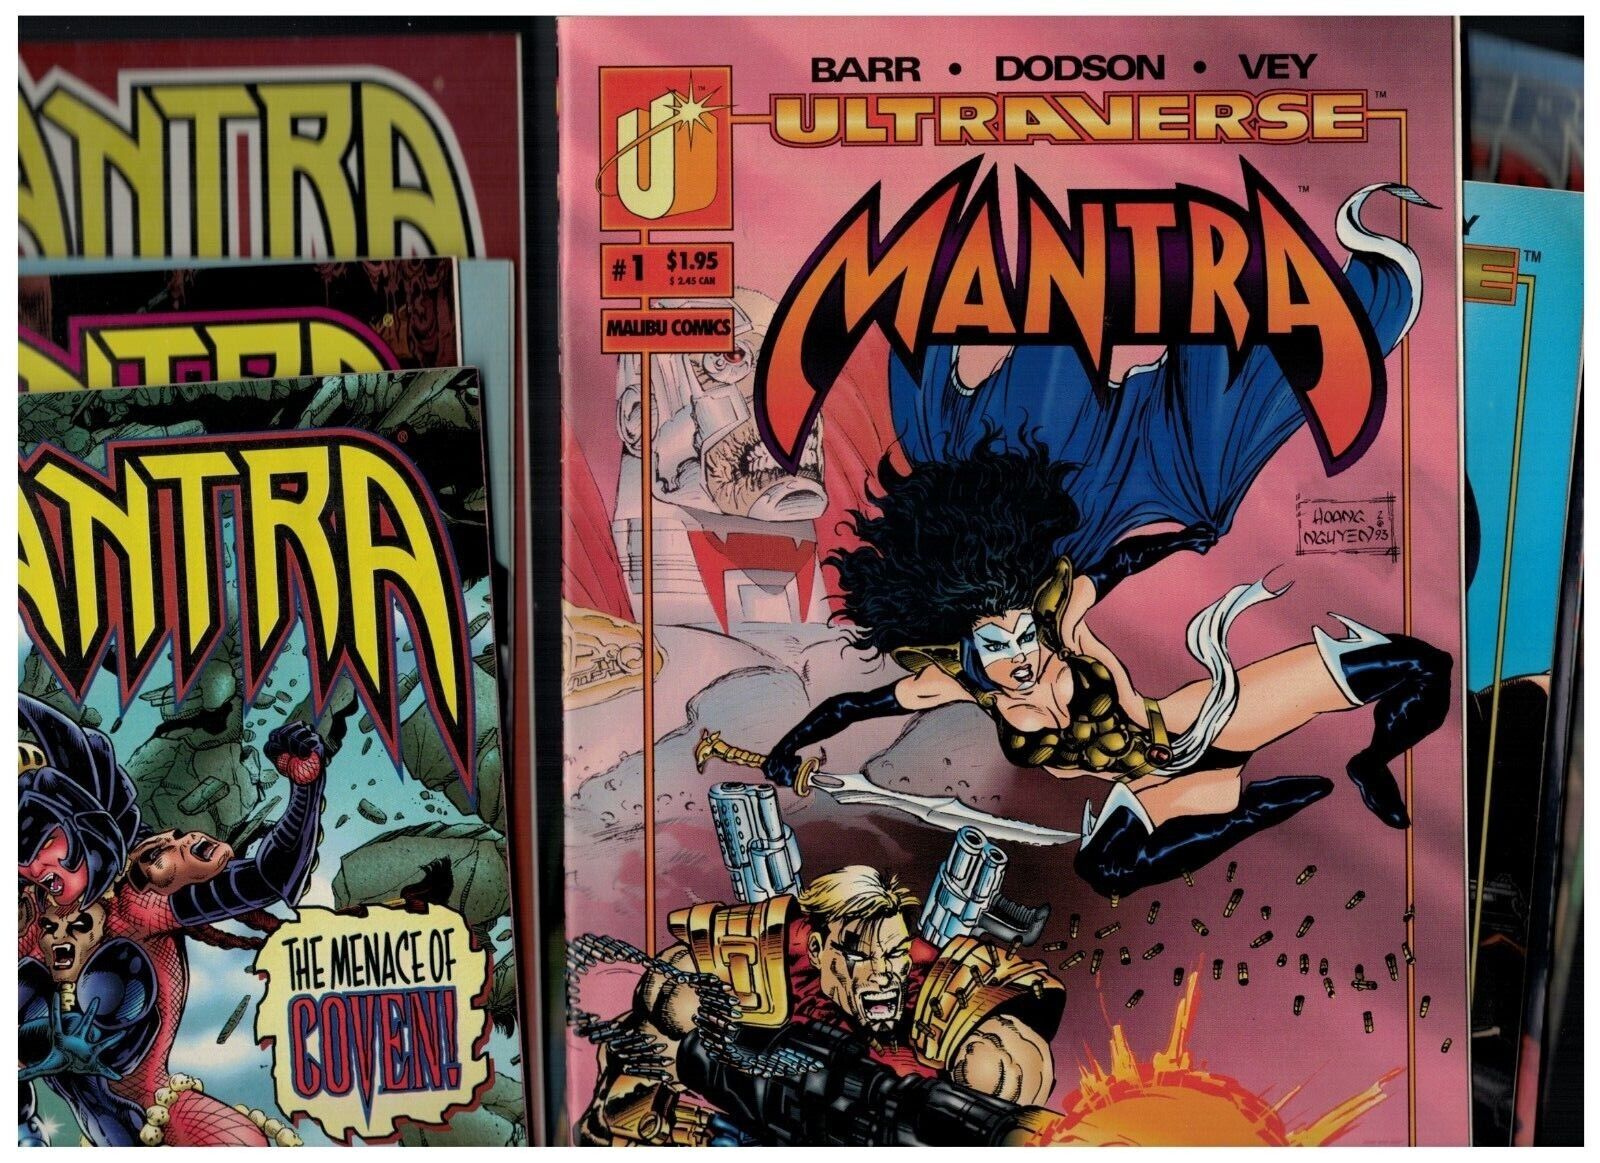 LOT: MANTRA 1-9, 11-14, 18, 20-24 (1993), MANTRA 1, 2, 3, 5, 6 (1995) +BLCK SEPT